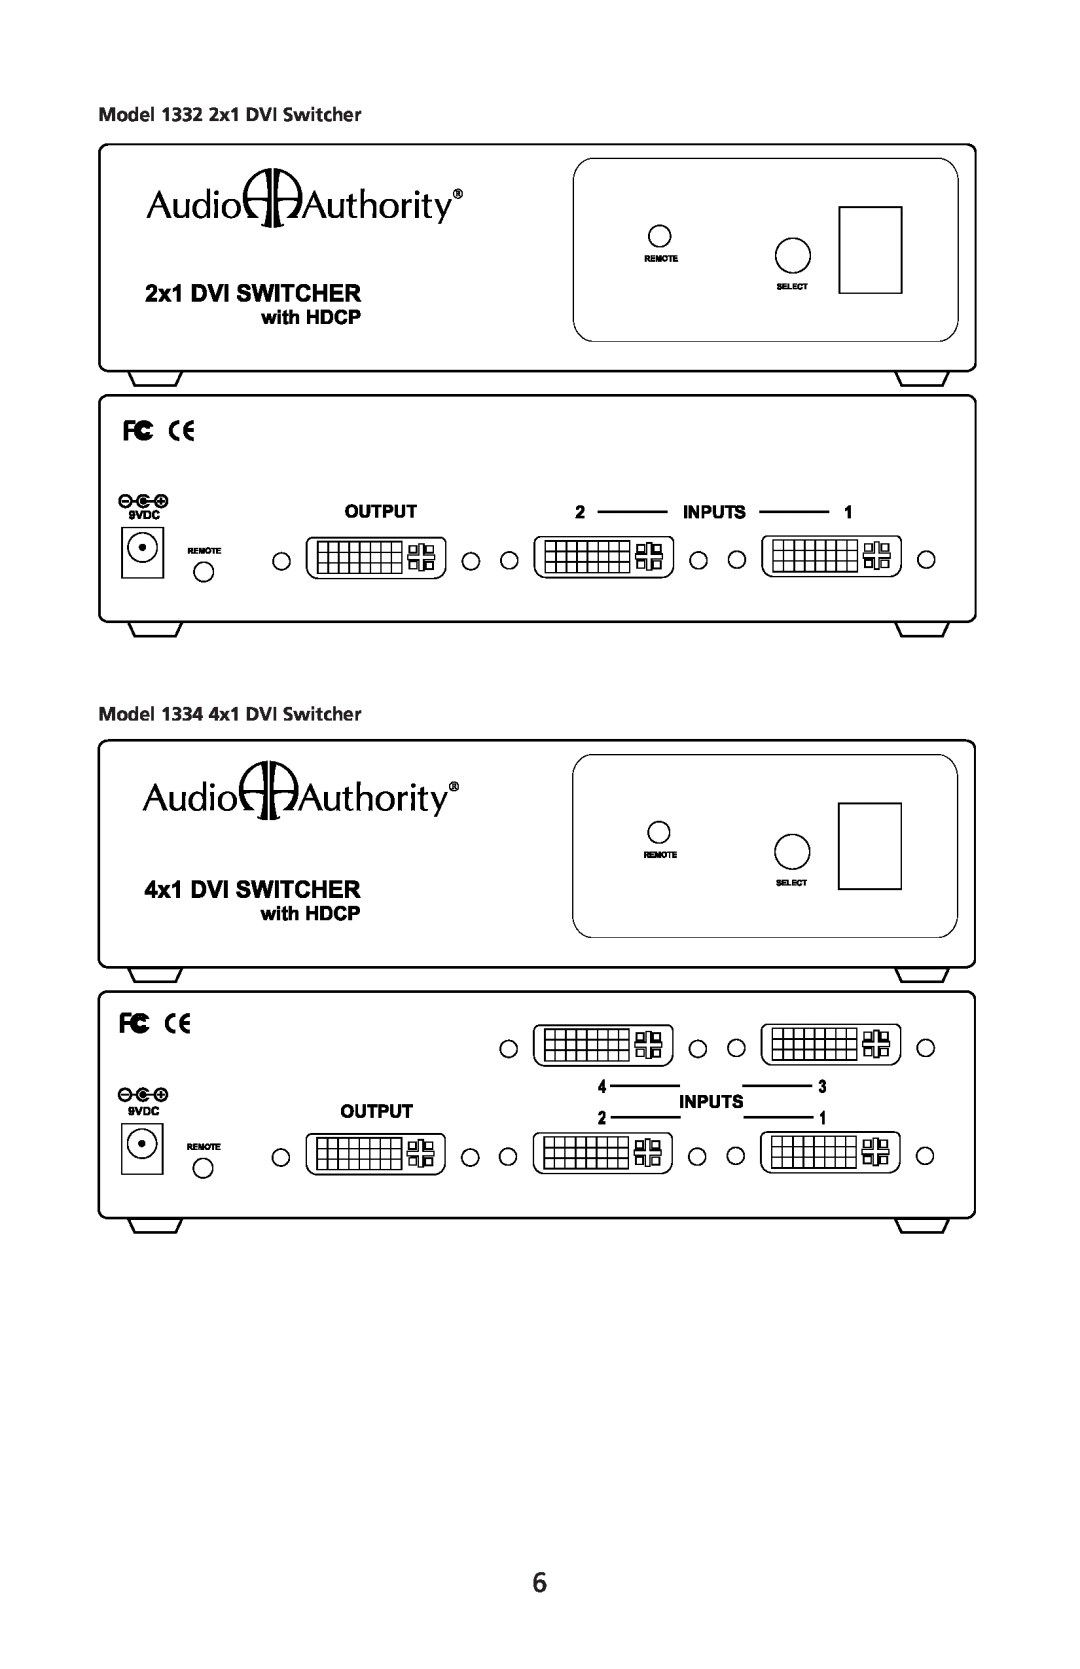 Audio Authority user manual Model 1332 2x1 DVI Switcher, Model 1334 4x1 DVI Switcher 